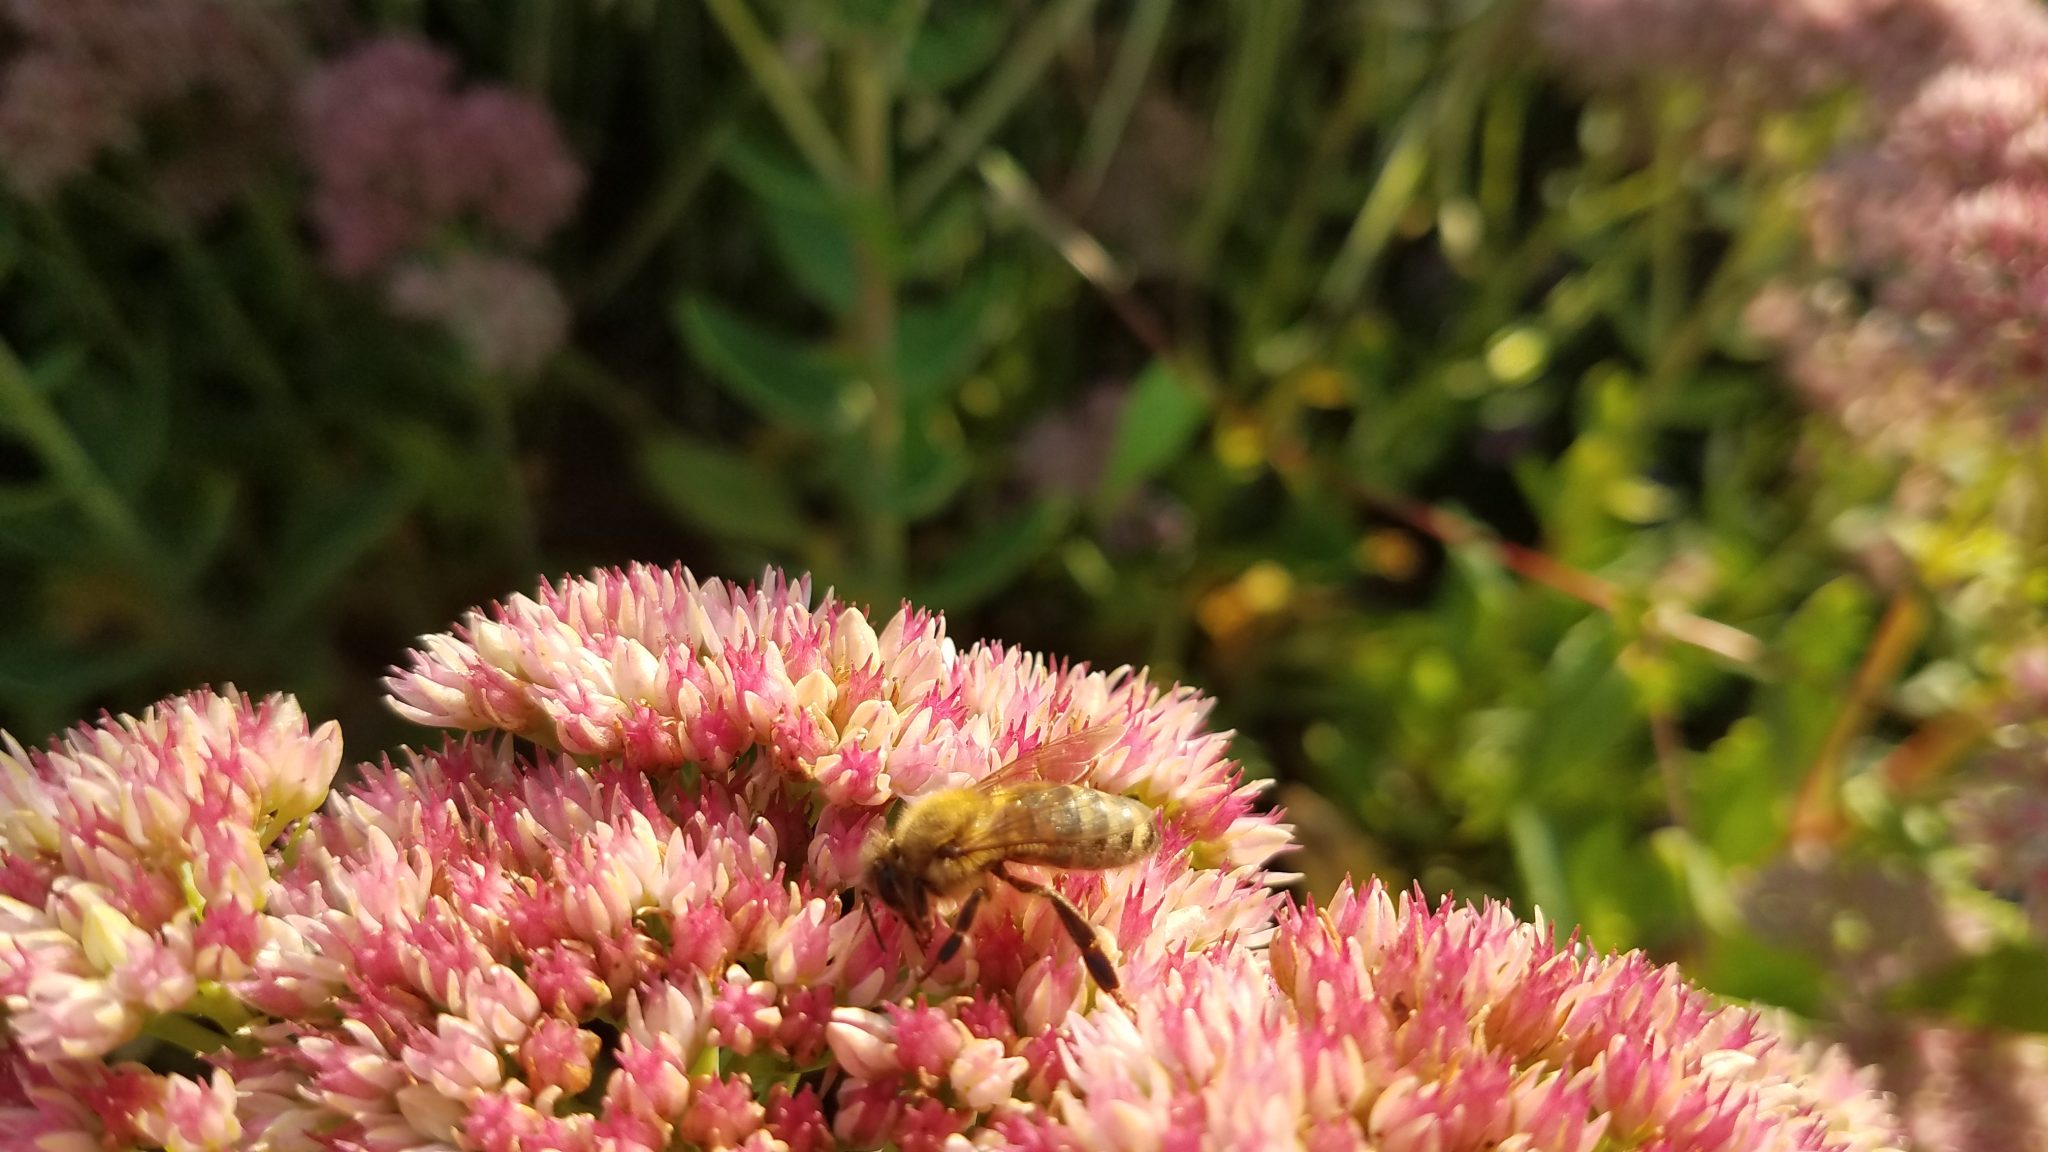 Honeybee on sedum